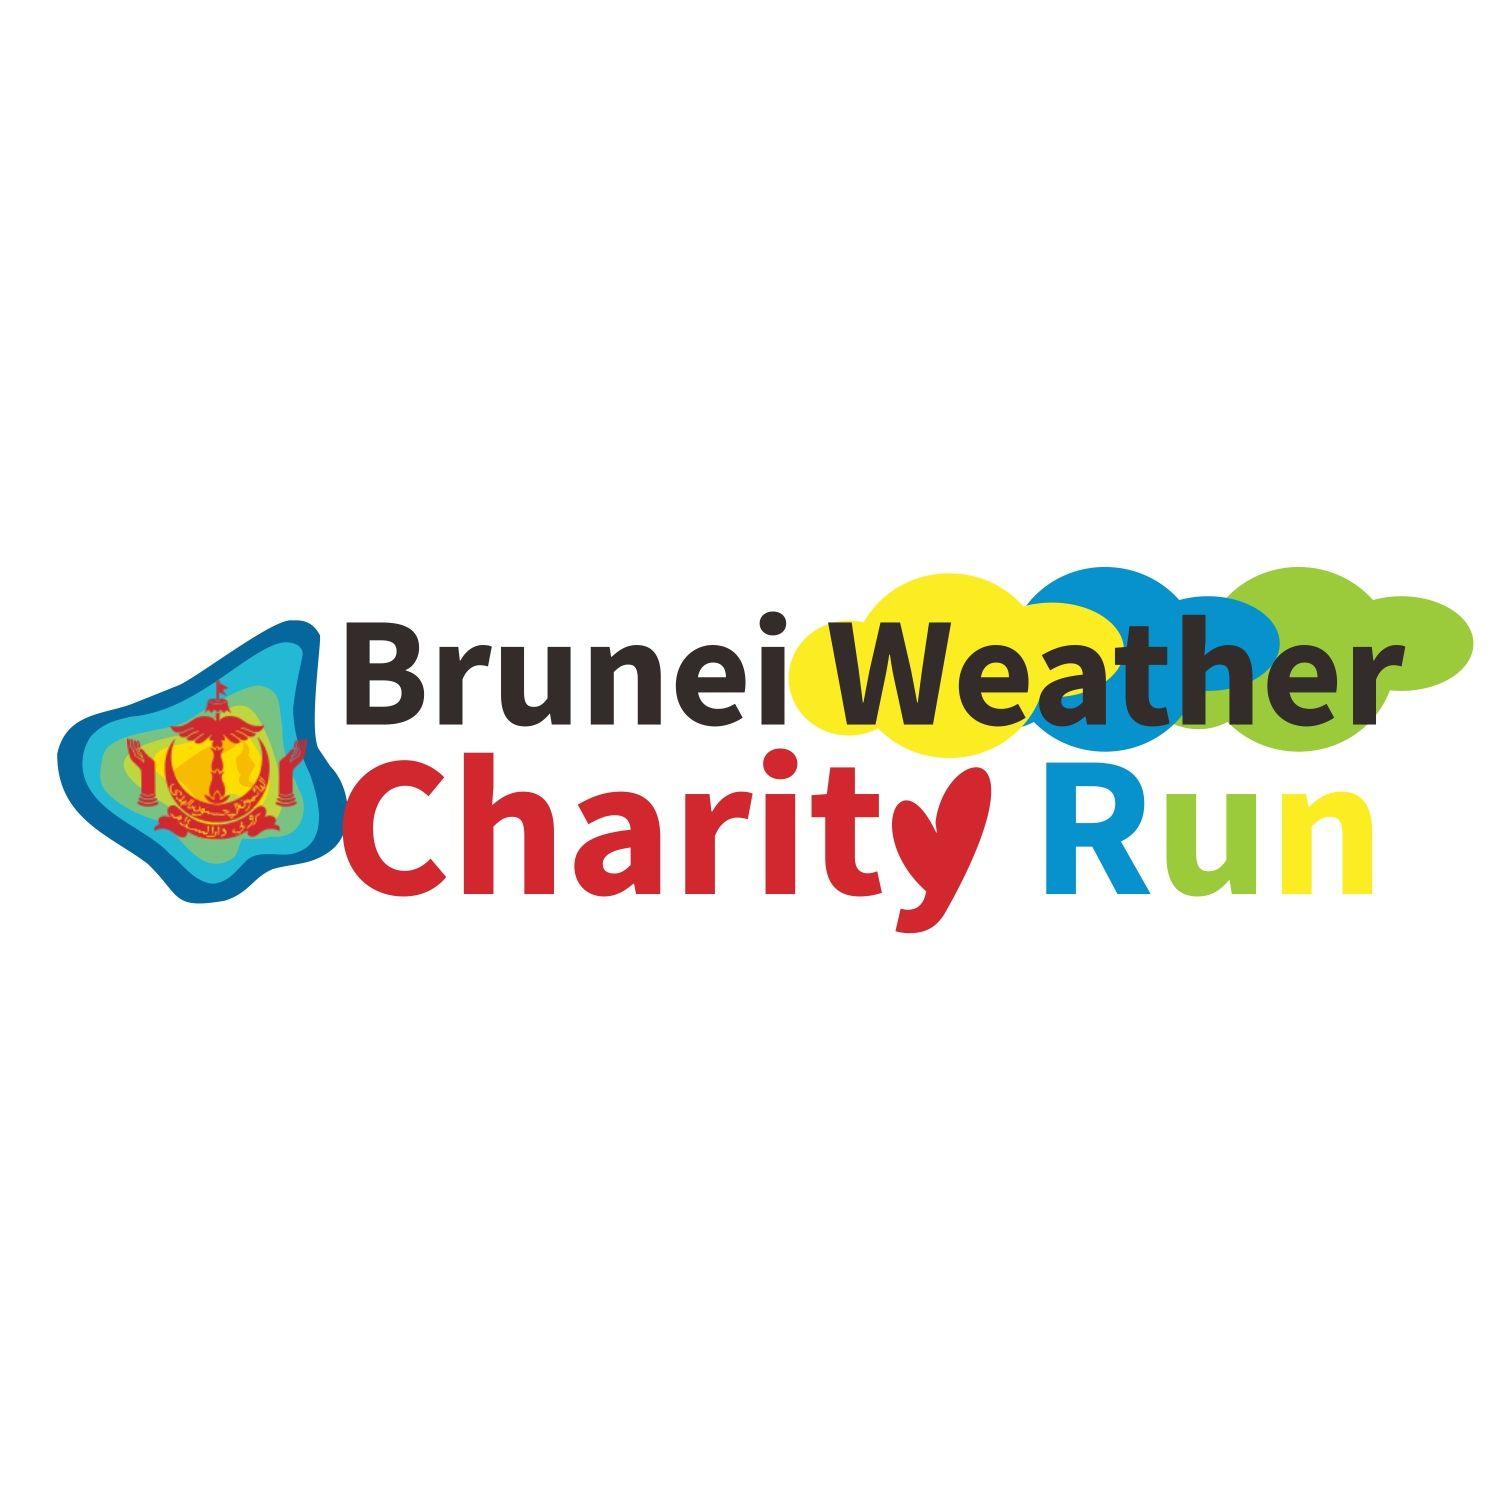 Brunei Logo - Modern, Professional, Charity Logo Design for Brunei Weather Charity ...